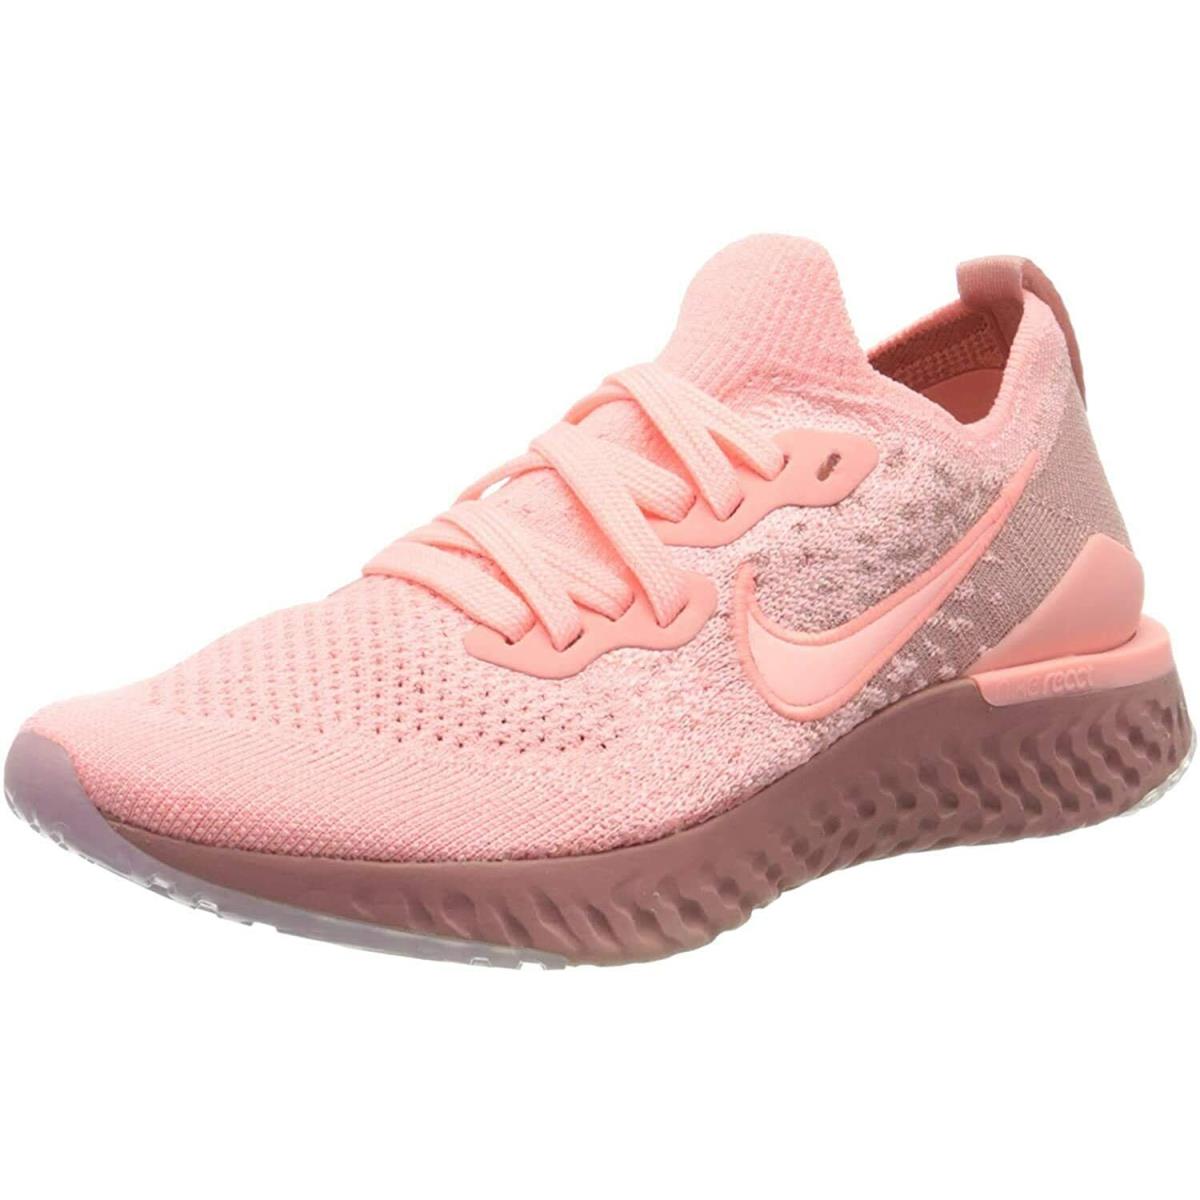 Nike Epic React Flyknit 2 Pink Women s Shoes Sz 11.5 Running Athletic BQ8927